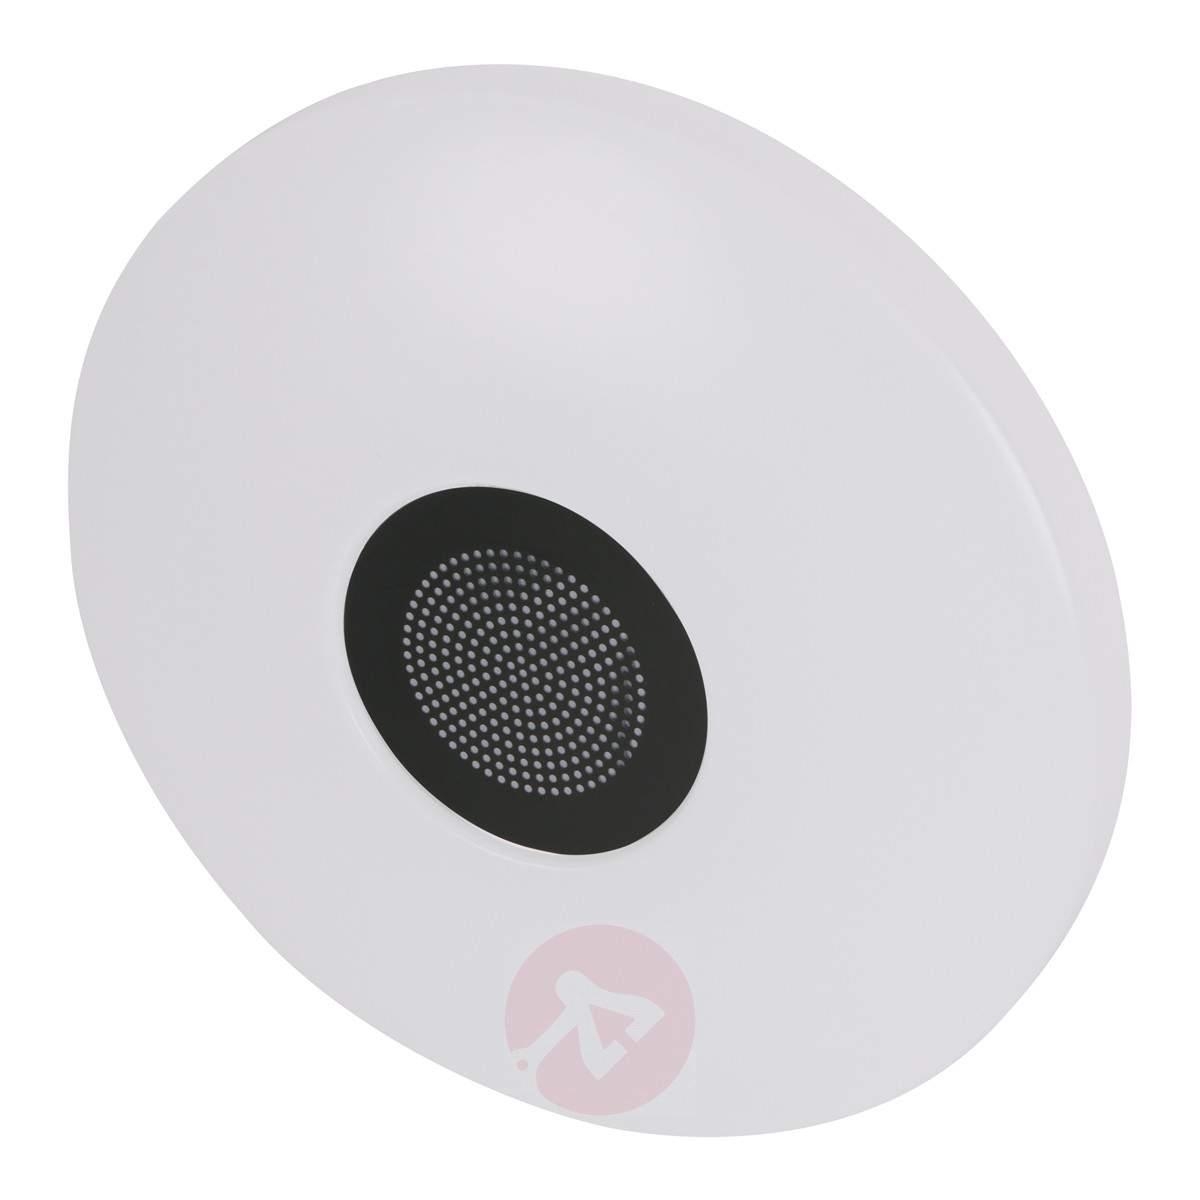 Bluetooth Ceiling Light Speakers1200 X 1200